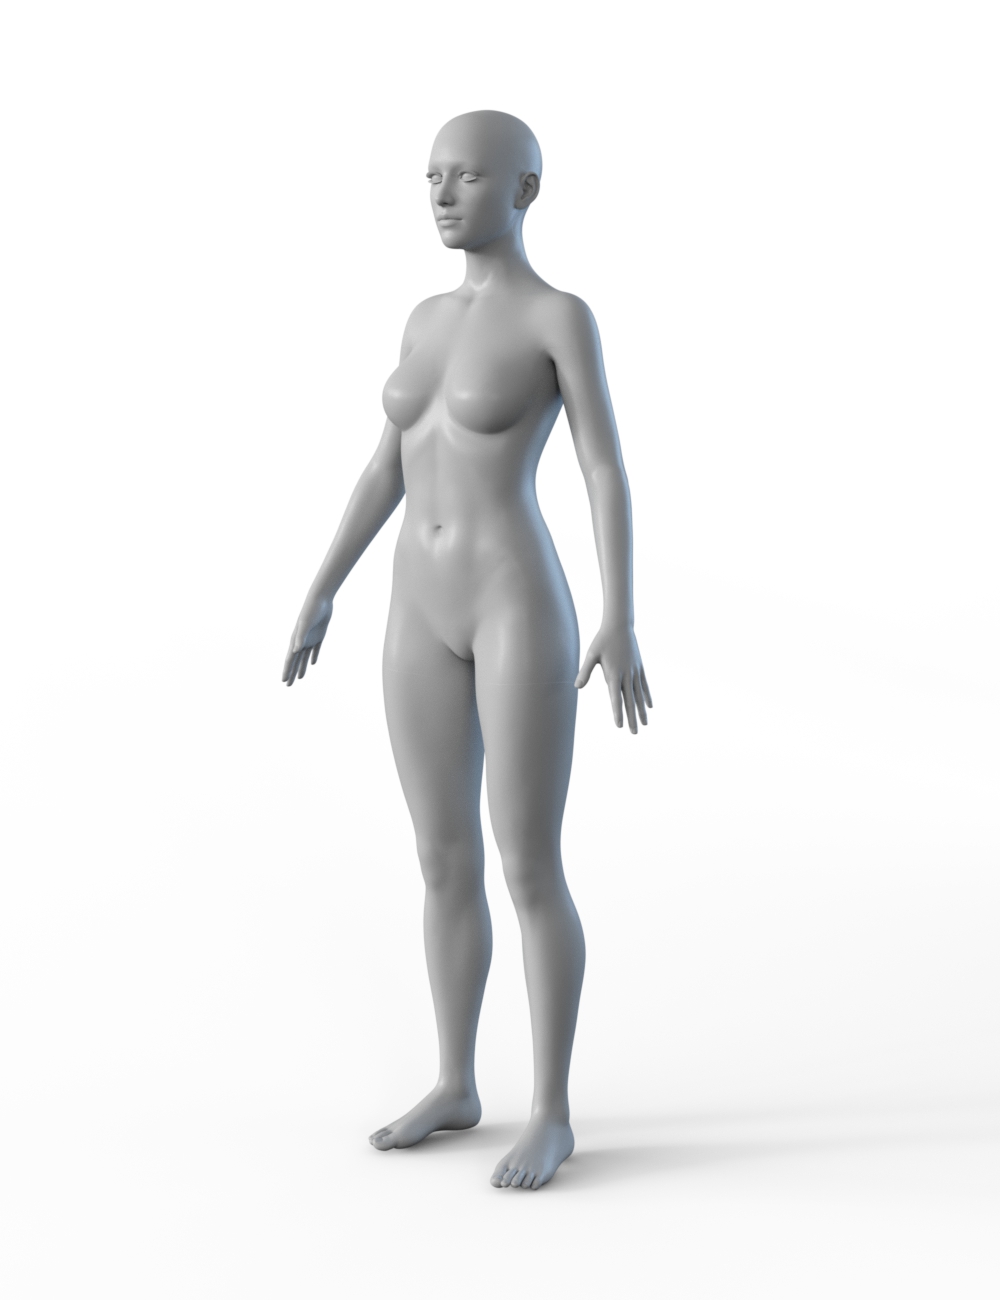 FBX- Lynsey Cardio Gear by: Paleo, 3D Models by Daz 3D